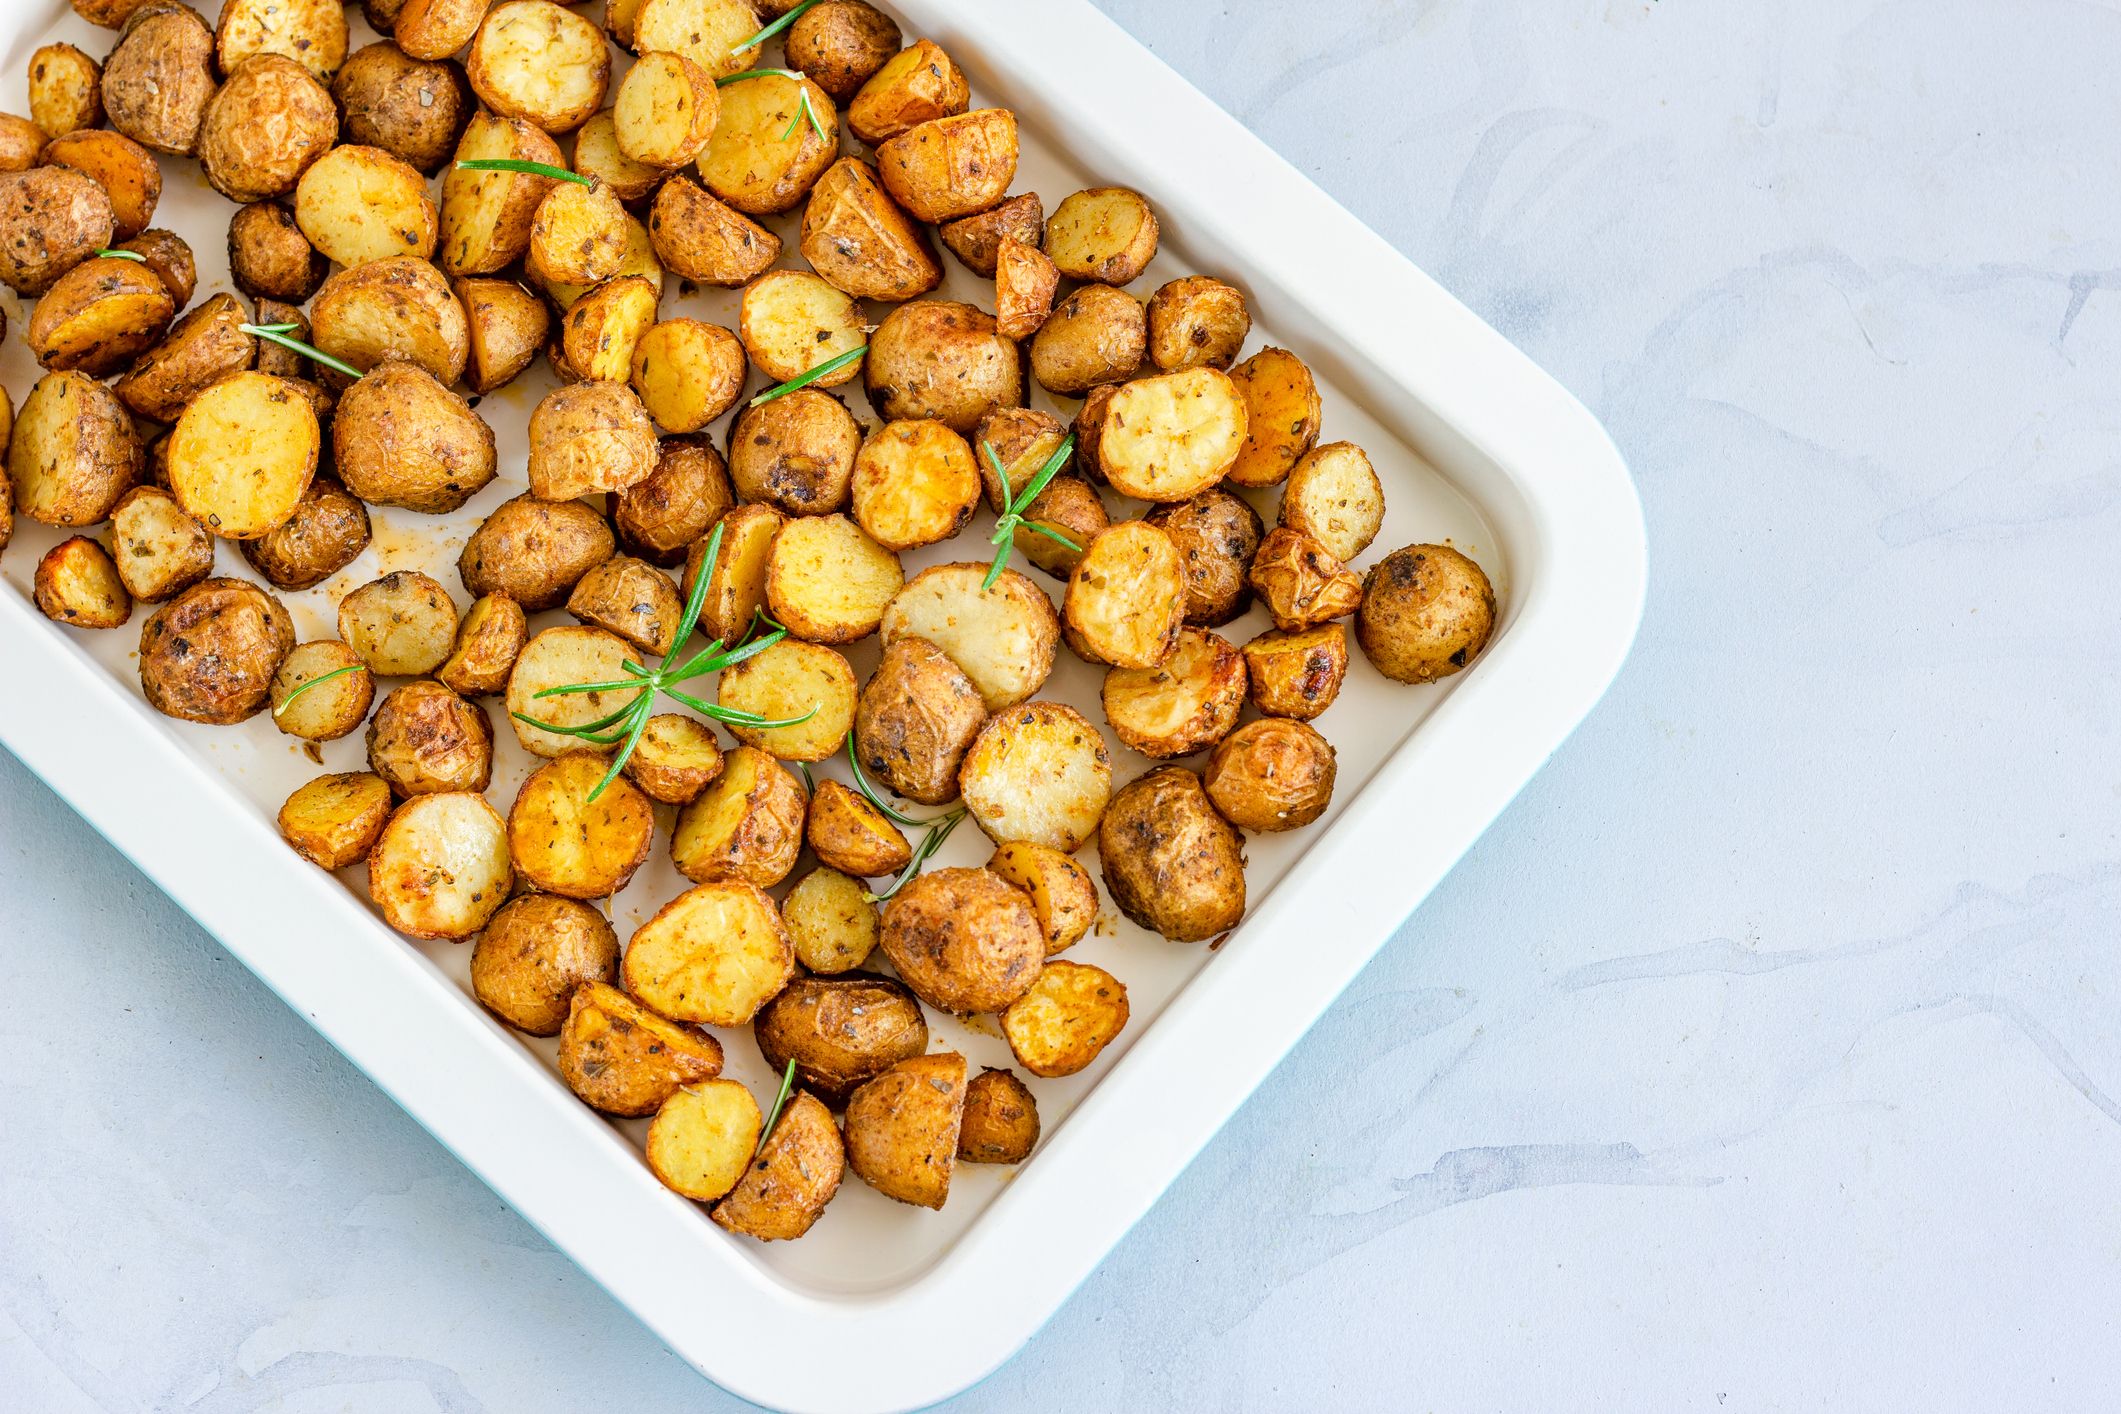 Health Benefits Of Baked Potatoes